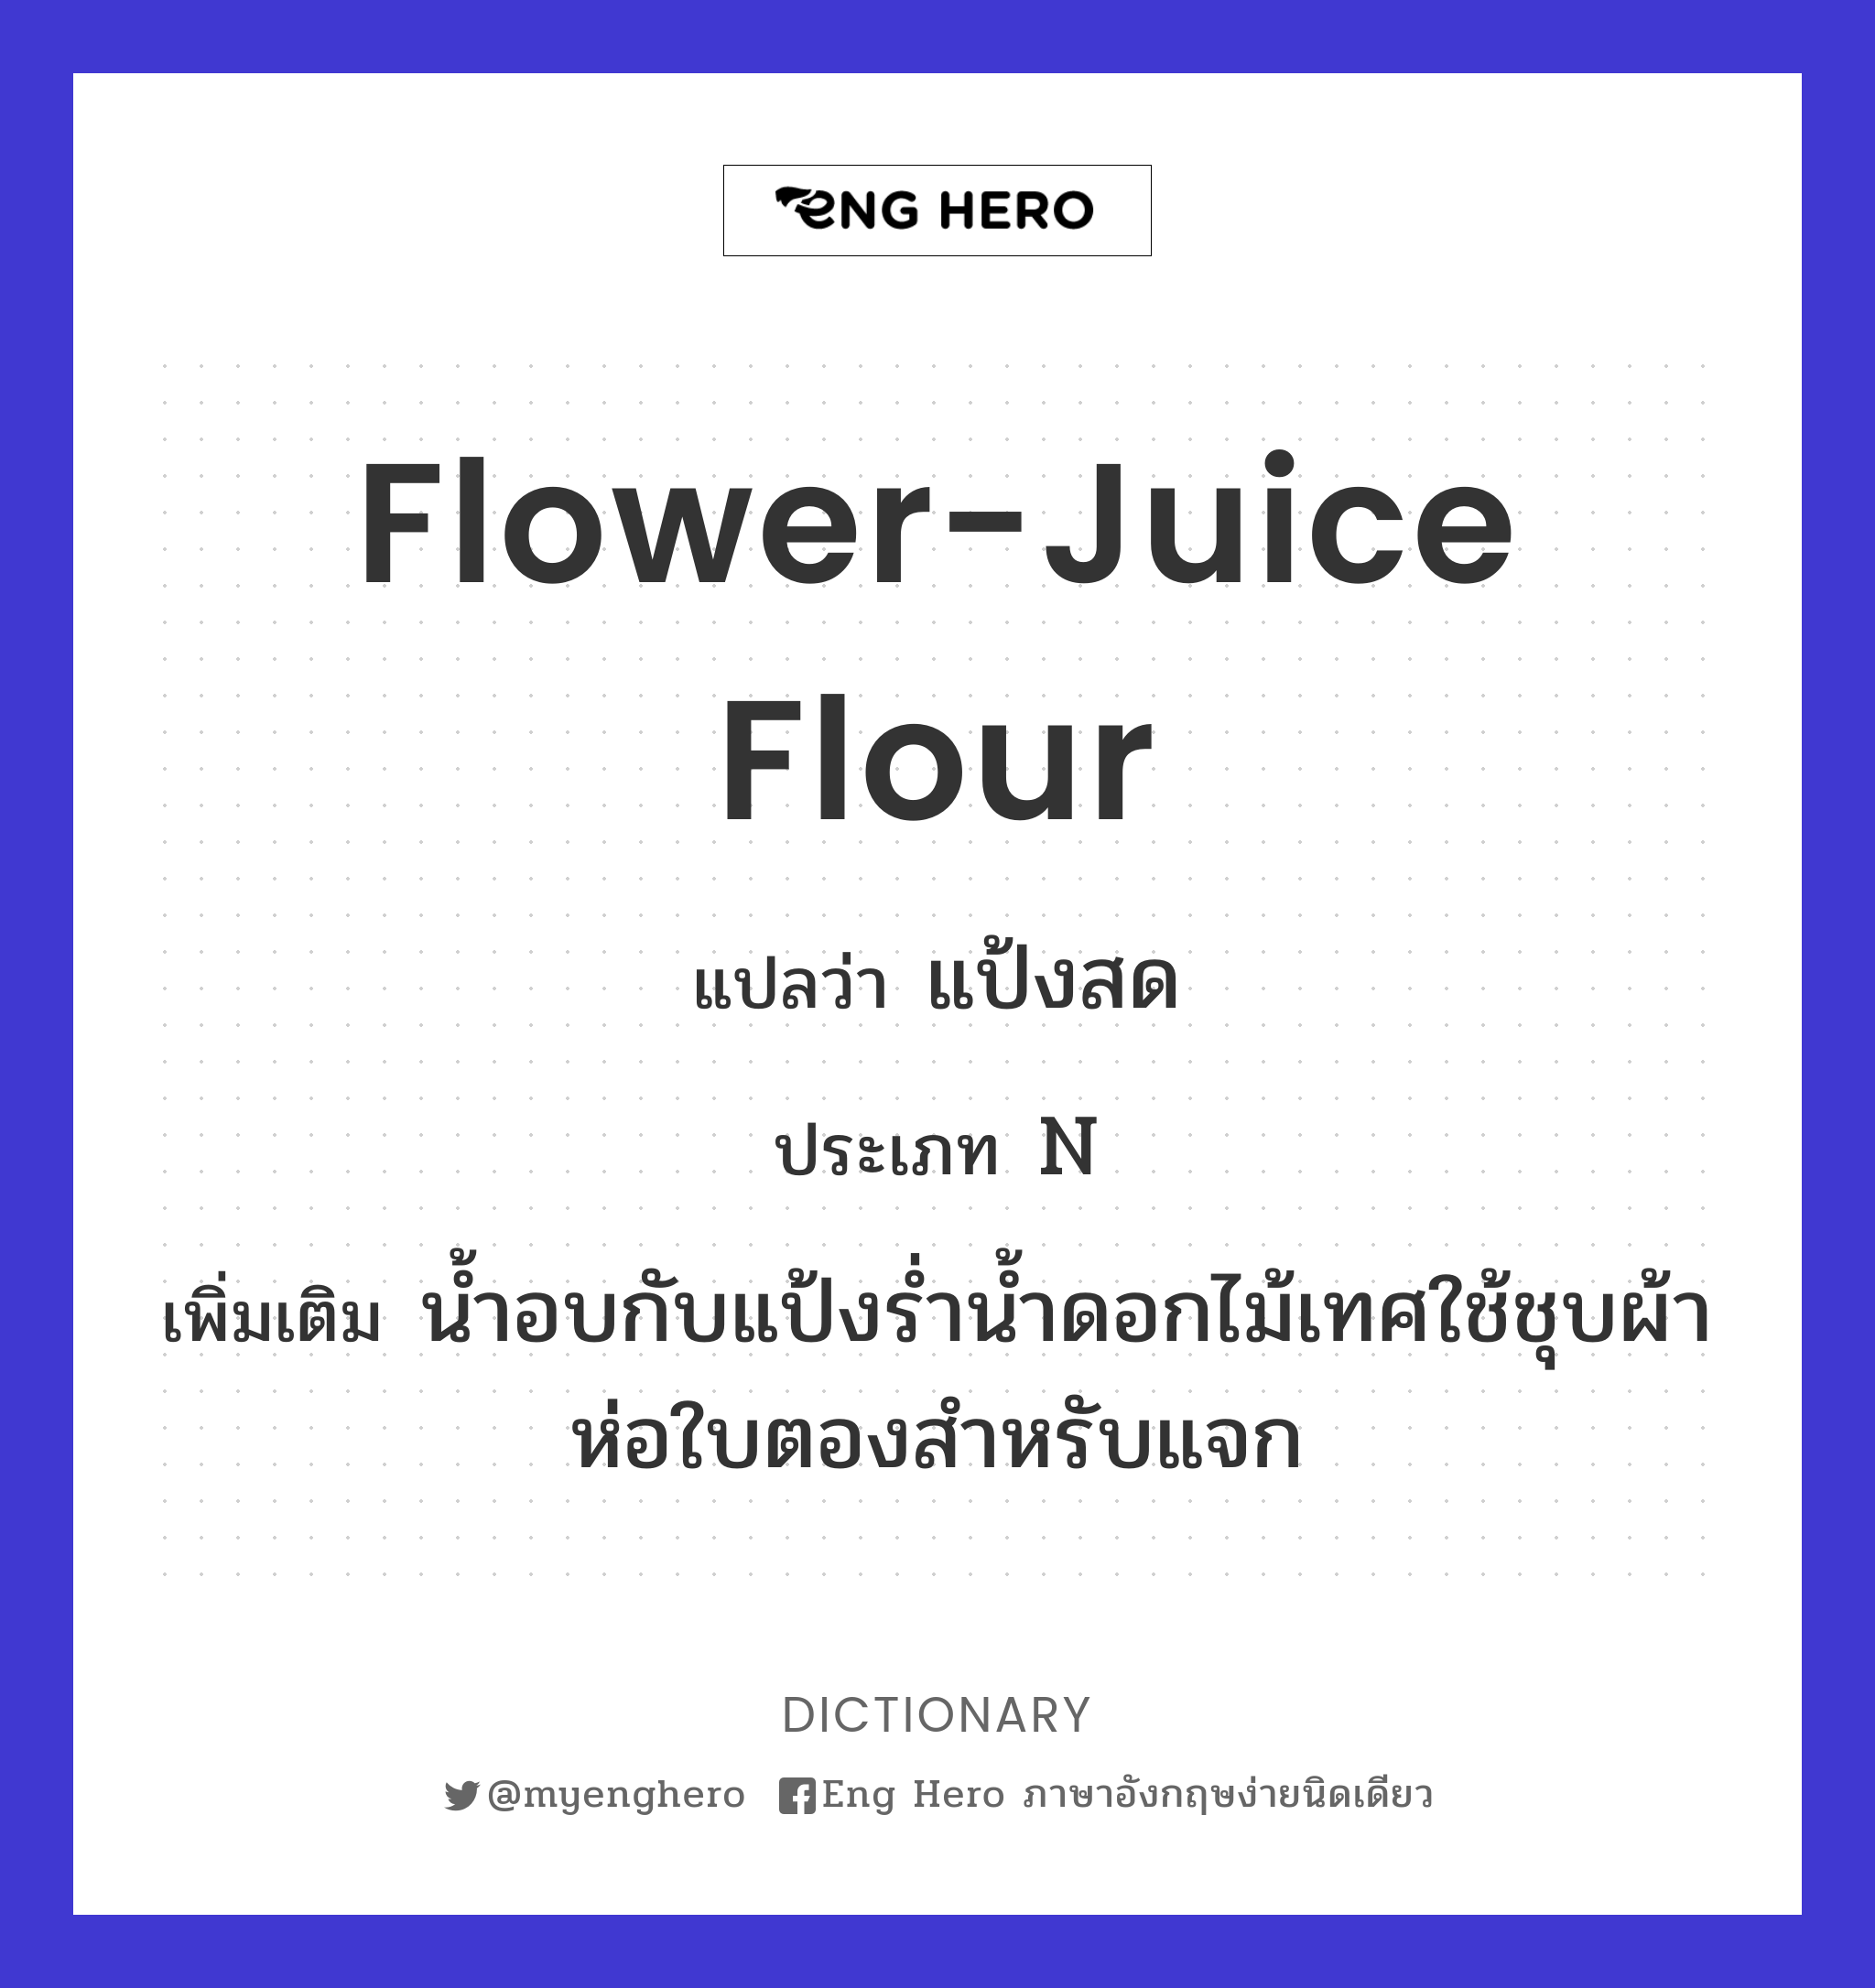 flower-juice flour